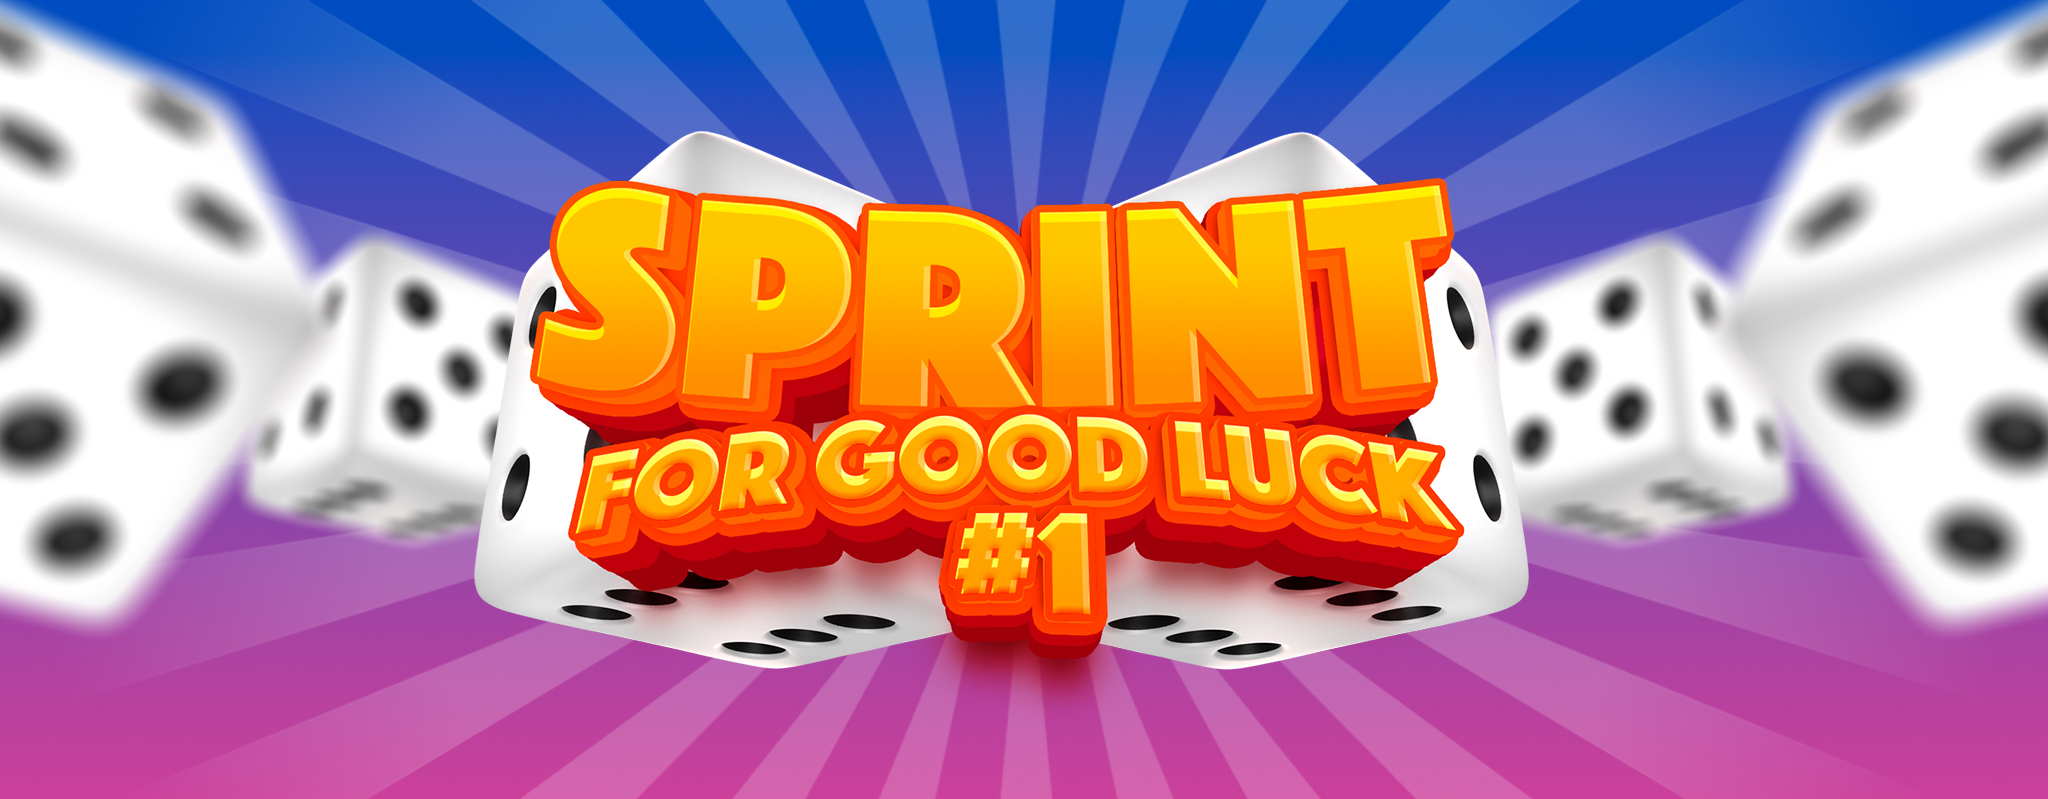 Sprint for good luck #1